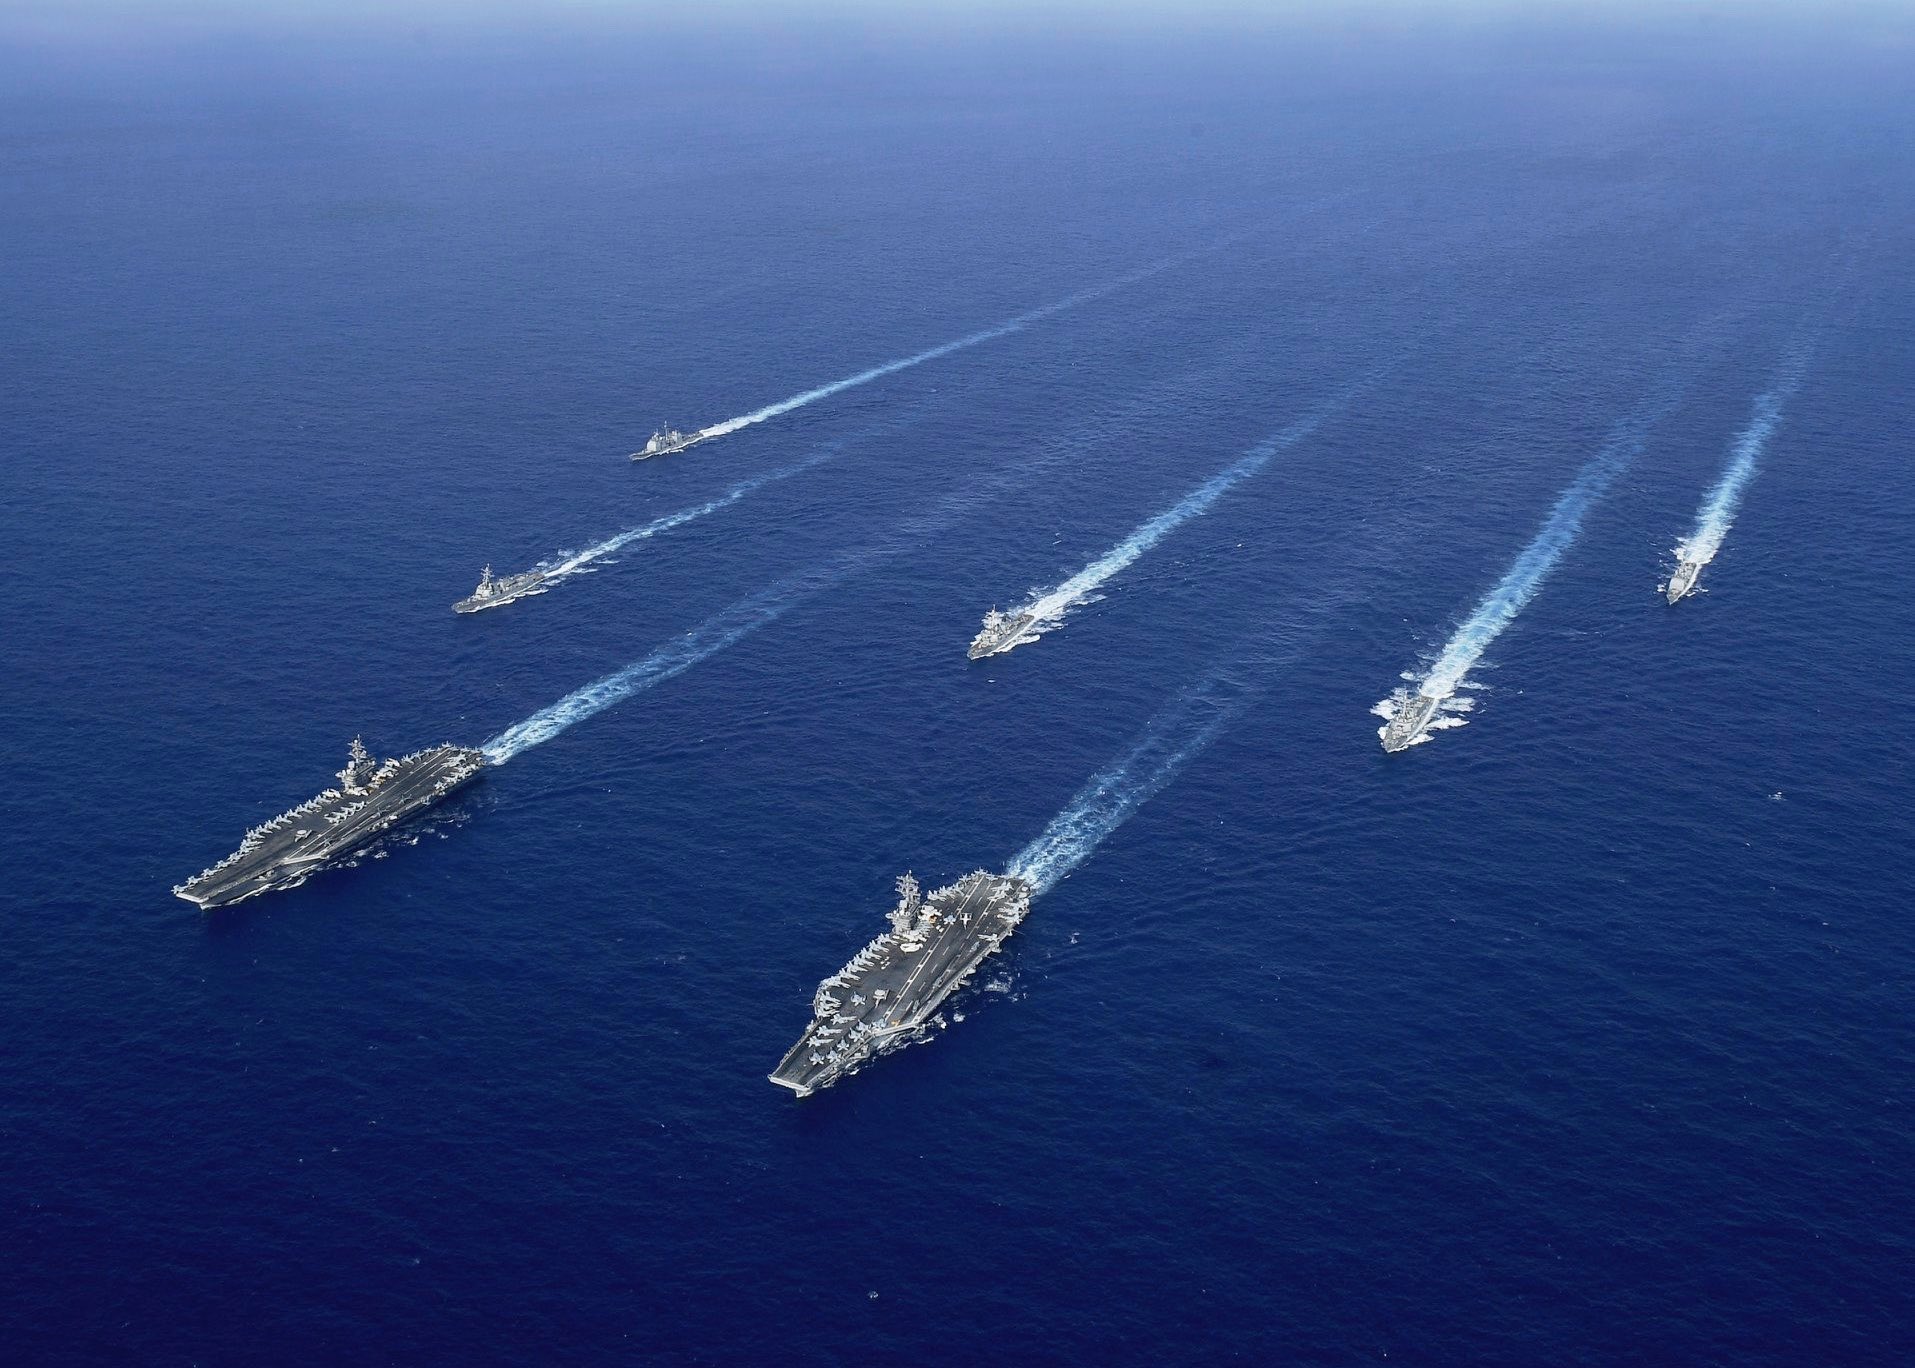 US ships in south china sea